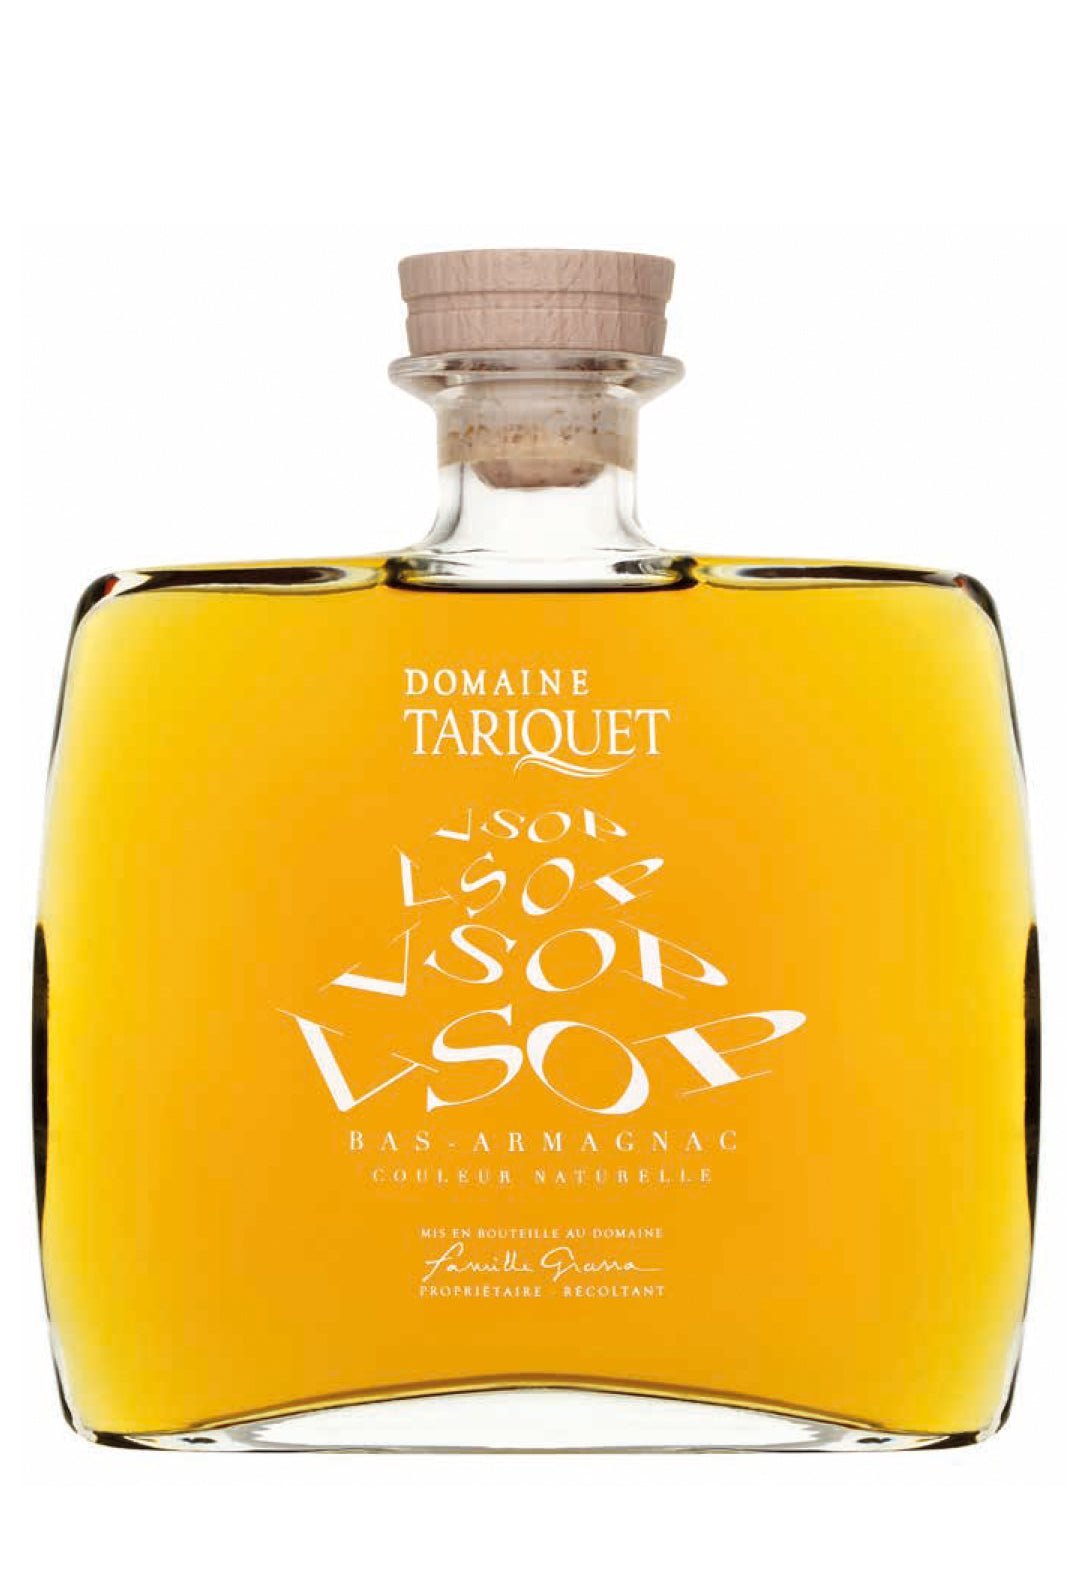 Domaine Tariquet Cabossee VSOP Bas-Armagnac 40% 700ml | Brandy | Shop online at Spirits of France